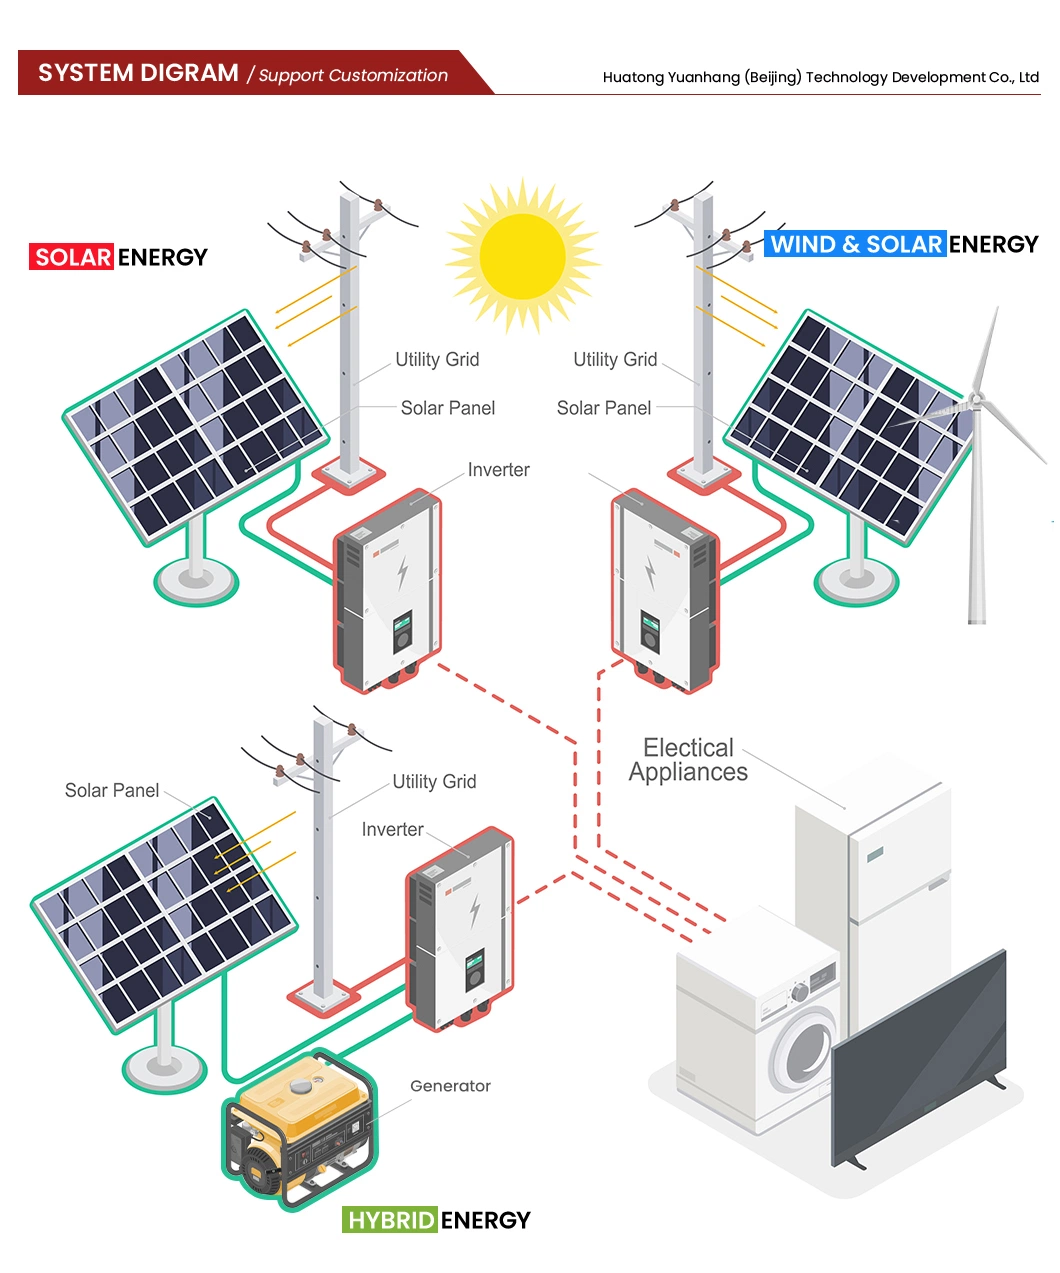 Htonetech PV Monocrystalline Solar Module Factory Solar Power Inverter off Grid China 3kv Solar Power System with Diesel Generators 50kw